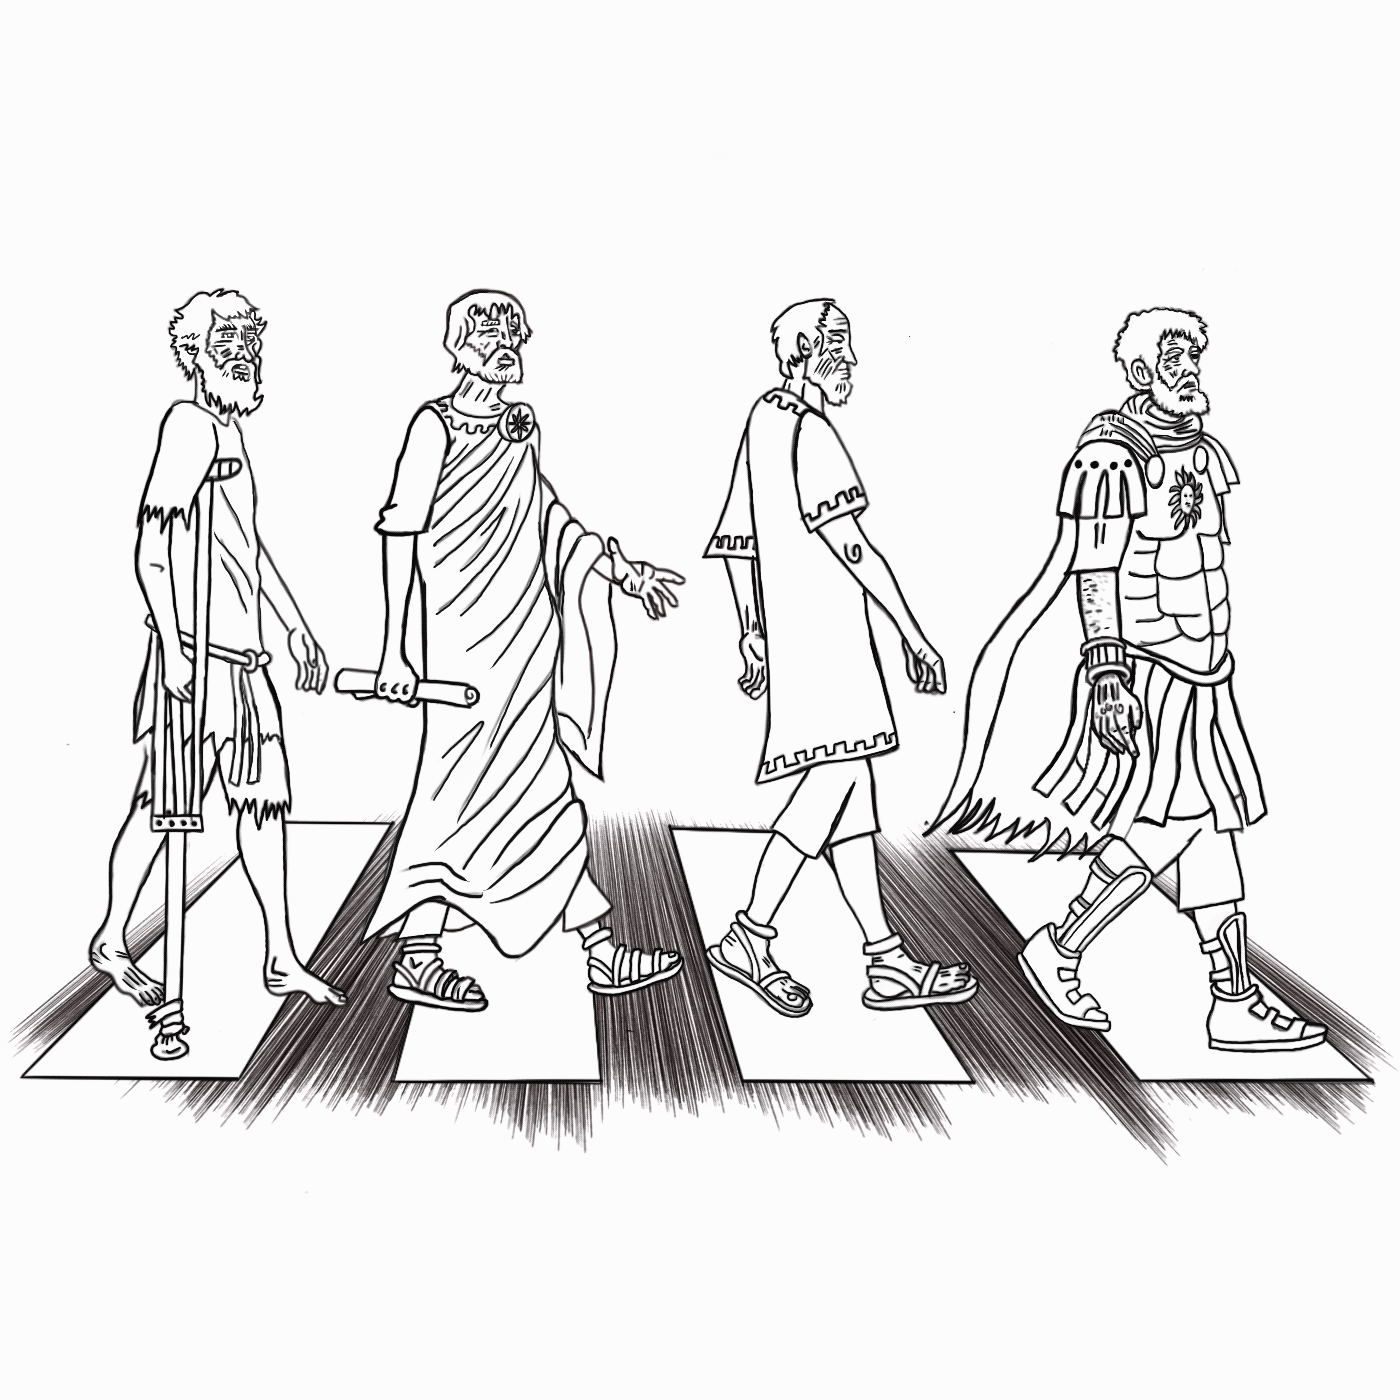 Stoics Walking Like the Beatles